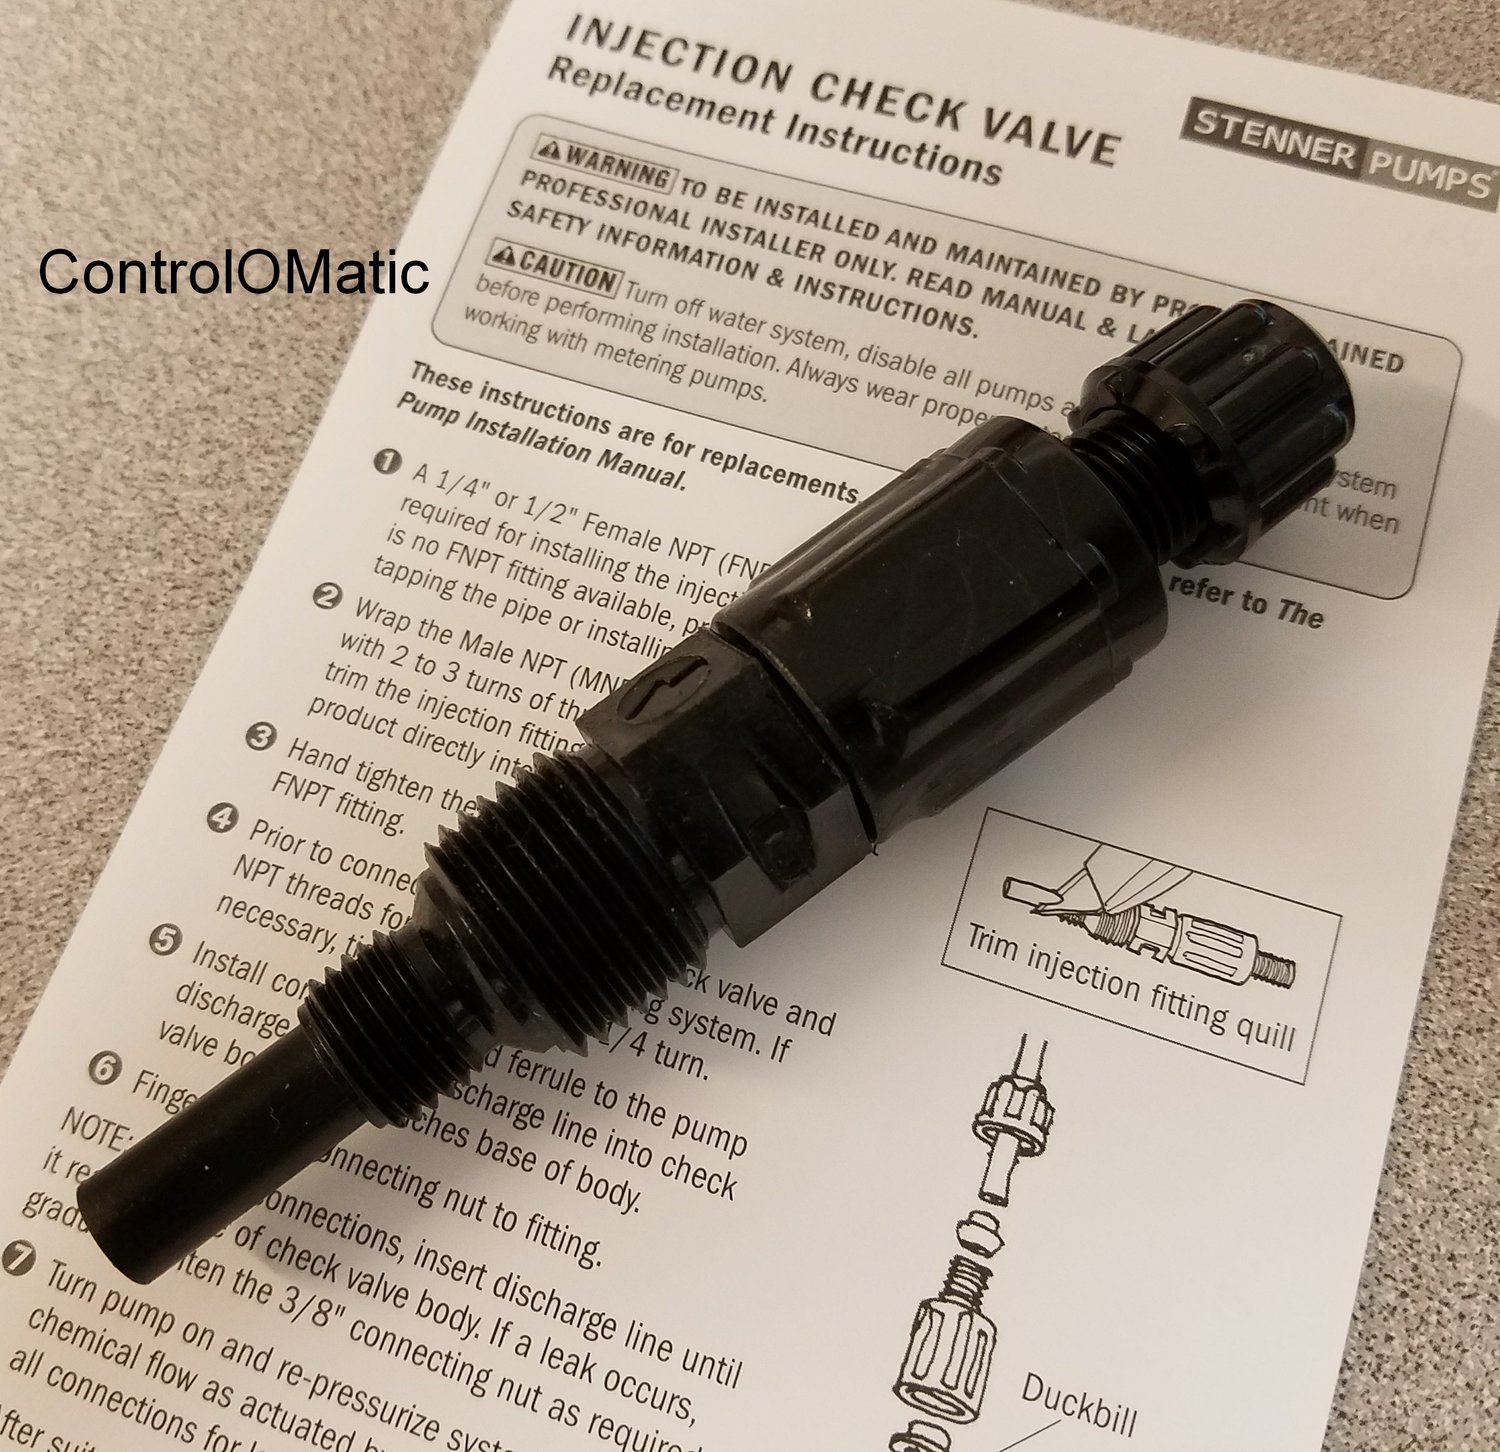 Stenner Pump Company UCDBINJ Injection Check Valve 1/4-Inch